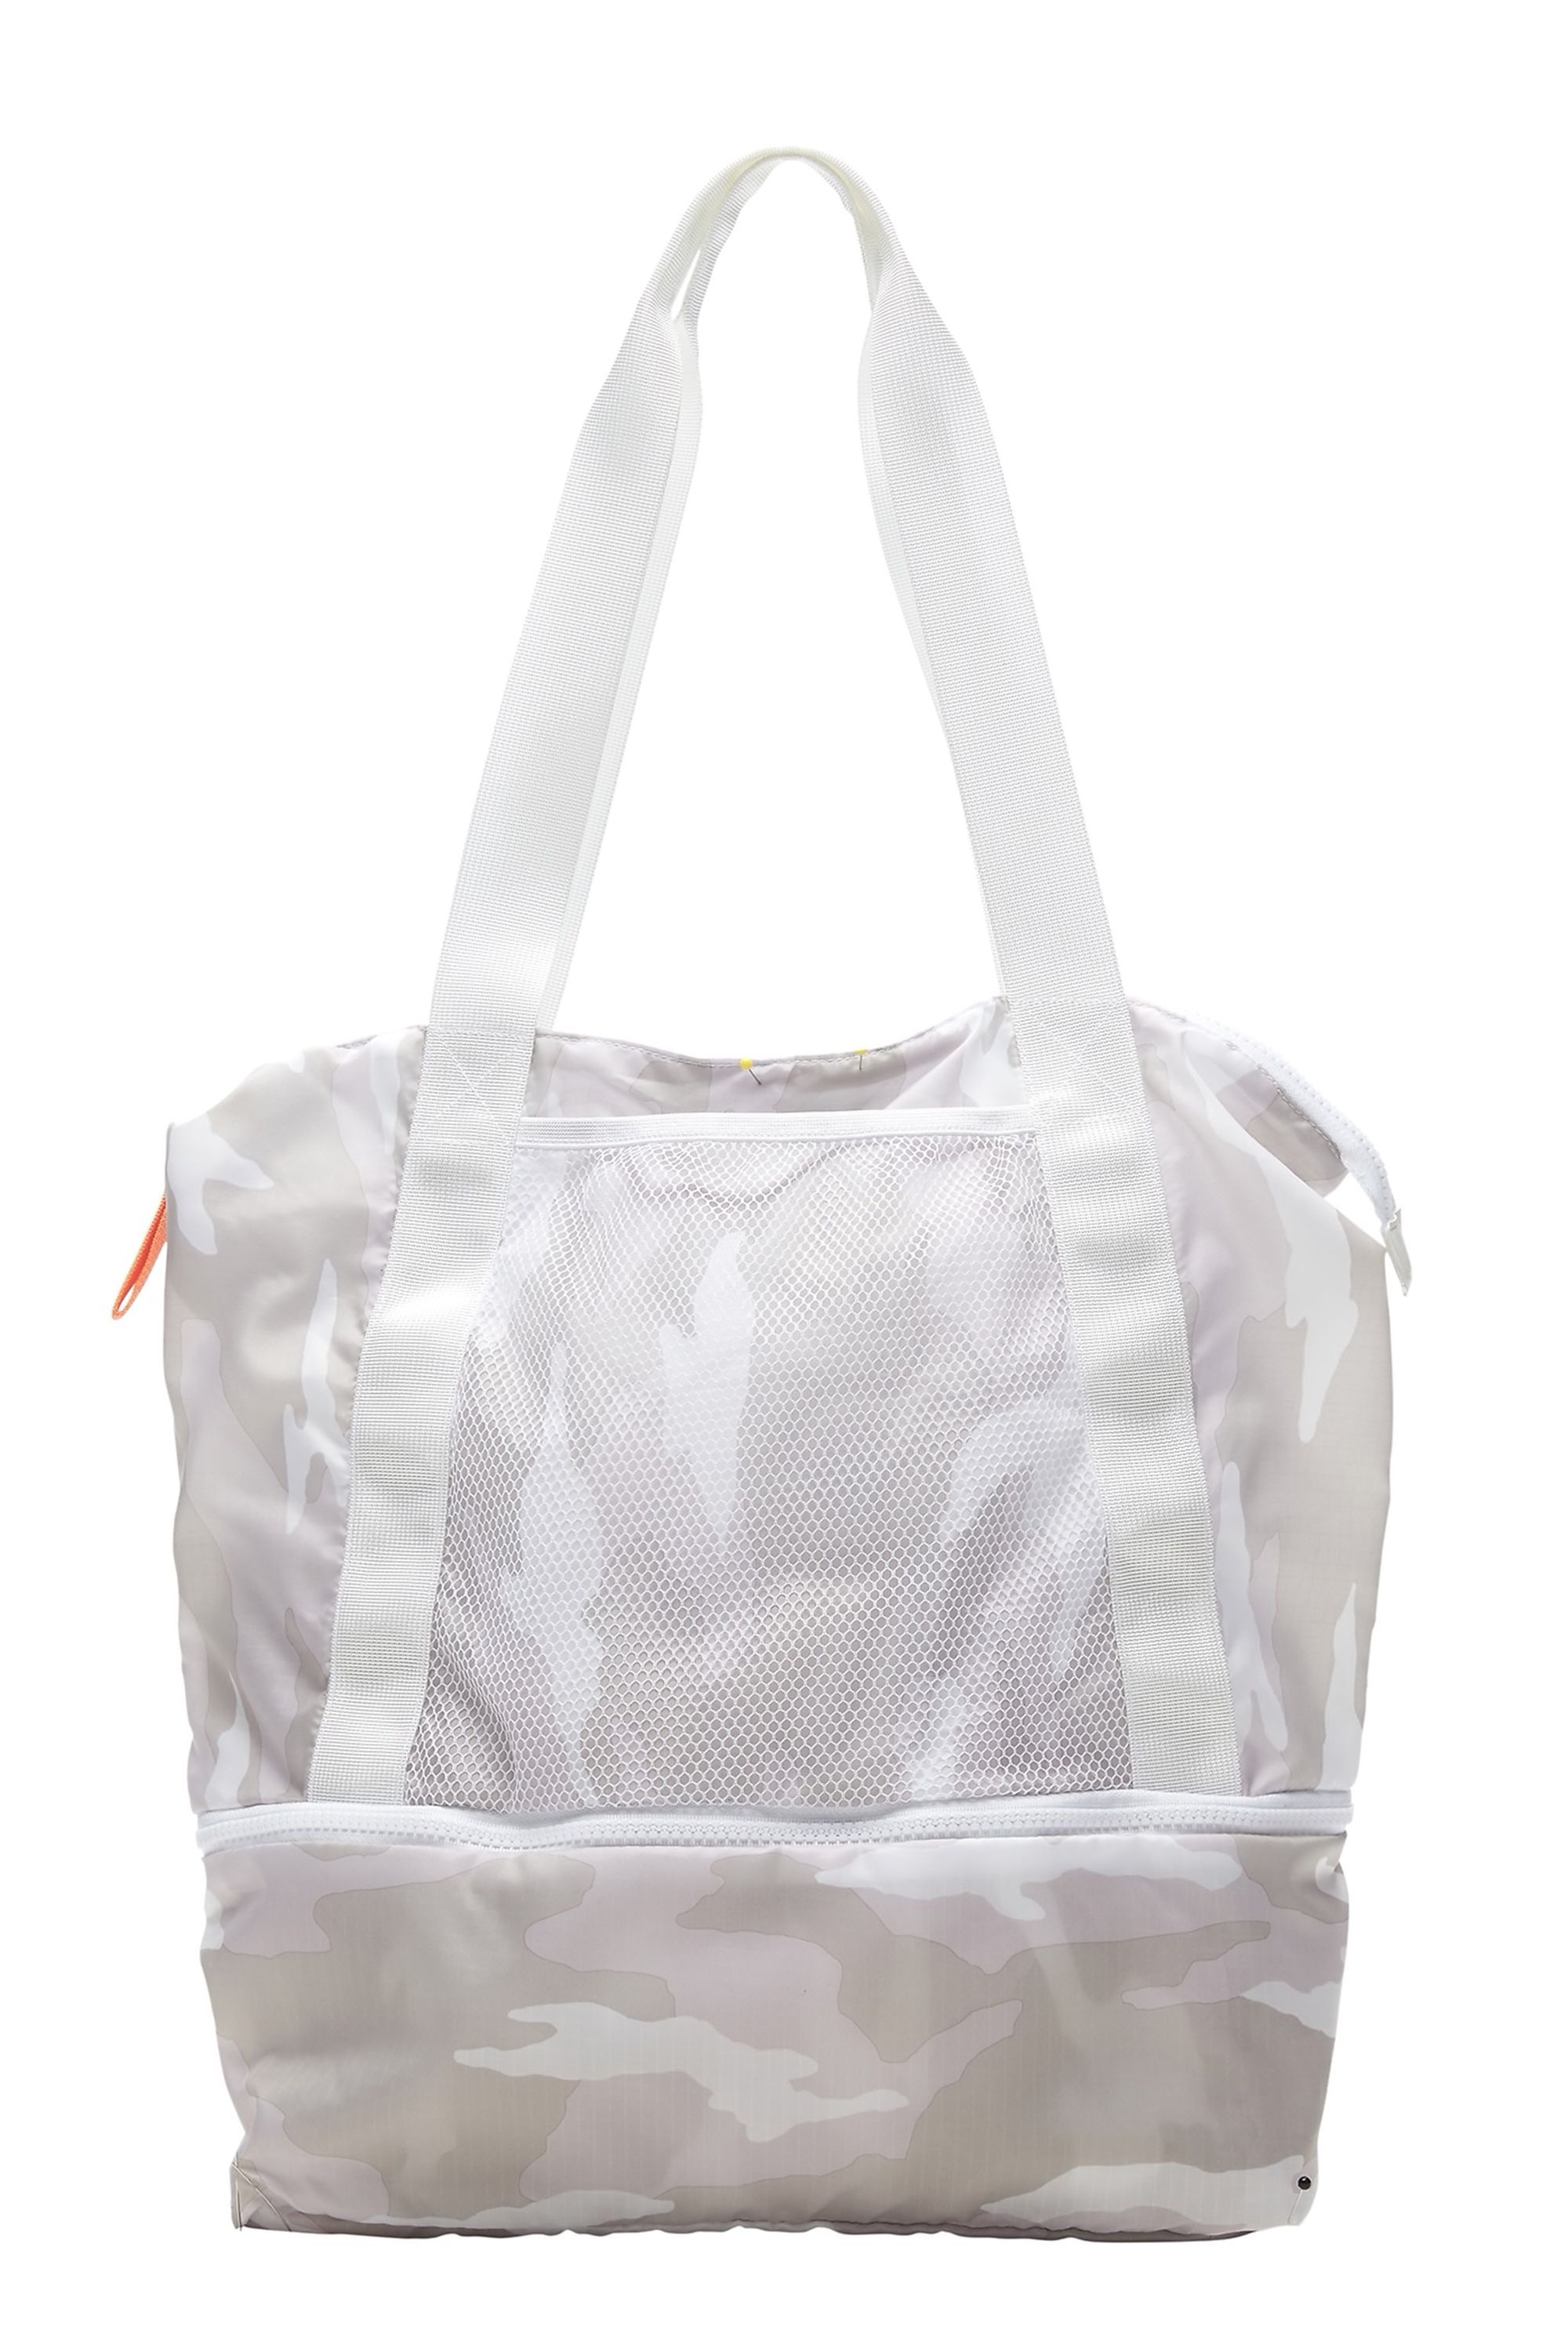 Cartoon Baseball Player Leisure Fashion PU Leather Handbag for Women Large Tote Bag Shoulder Bag for Gym Beach Travel Daily Bags